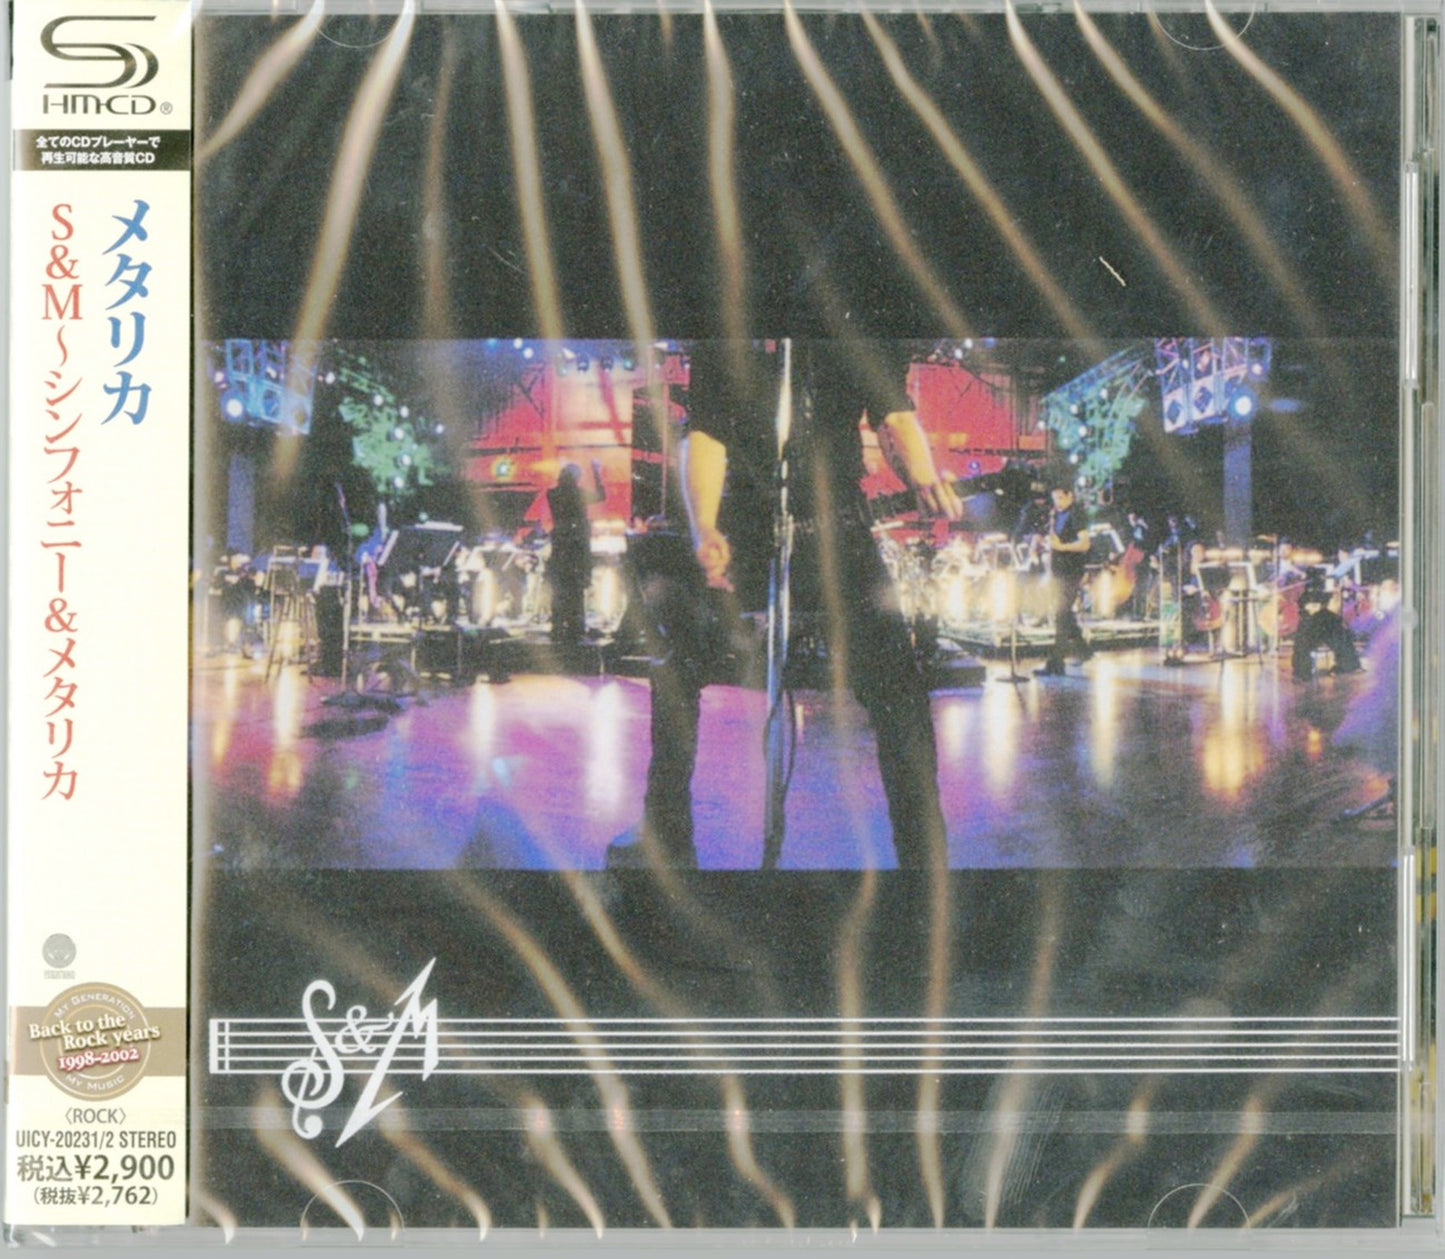 Metallica - S&M - Japan  2 SHM-CD